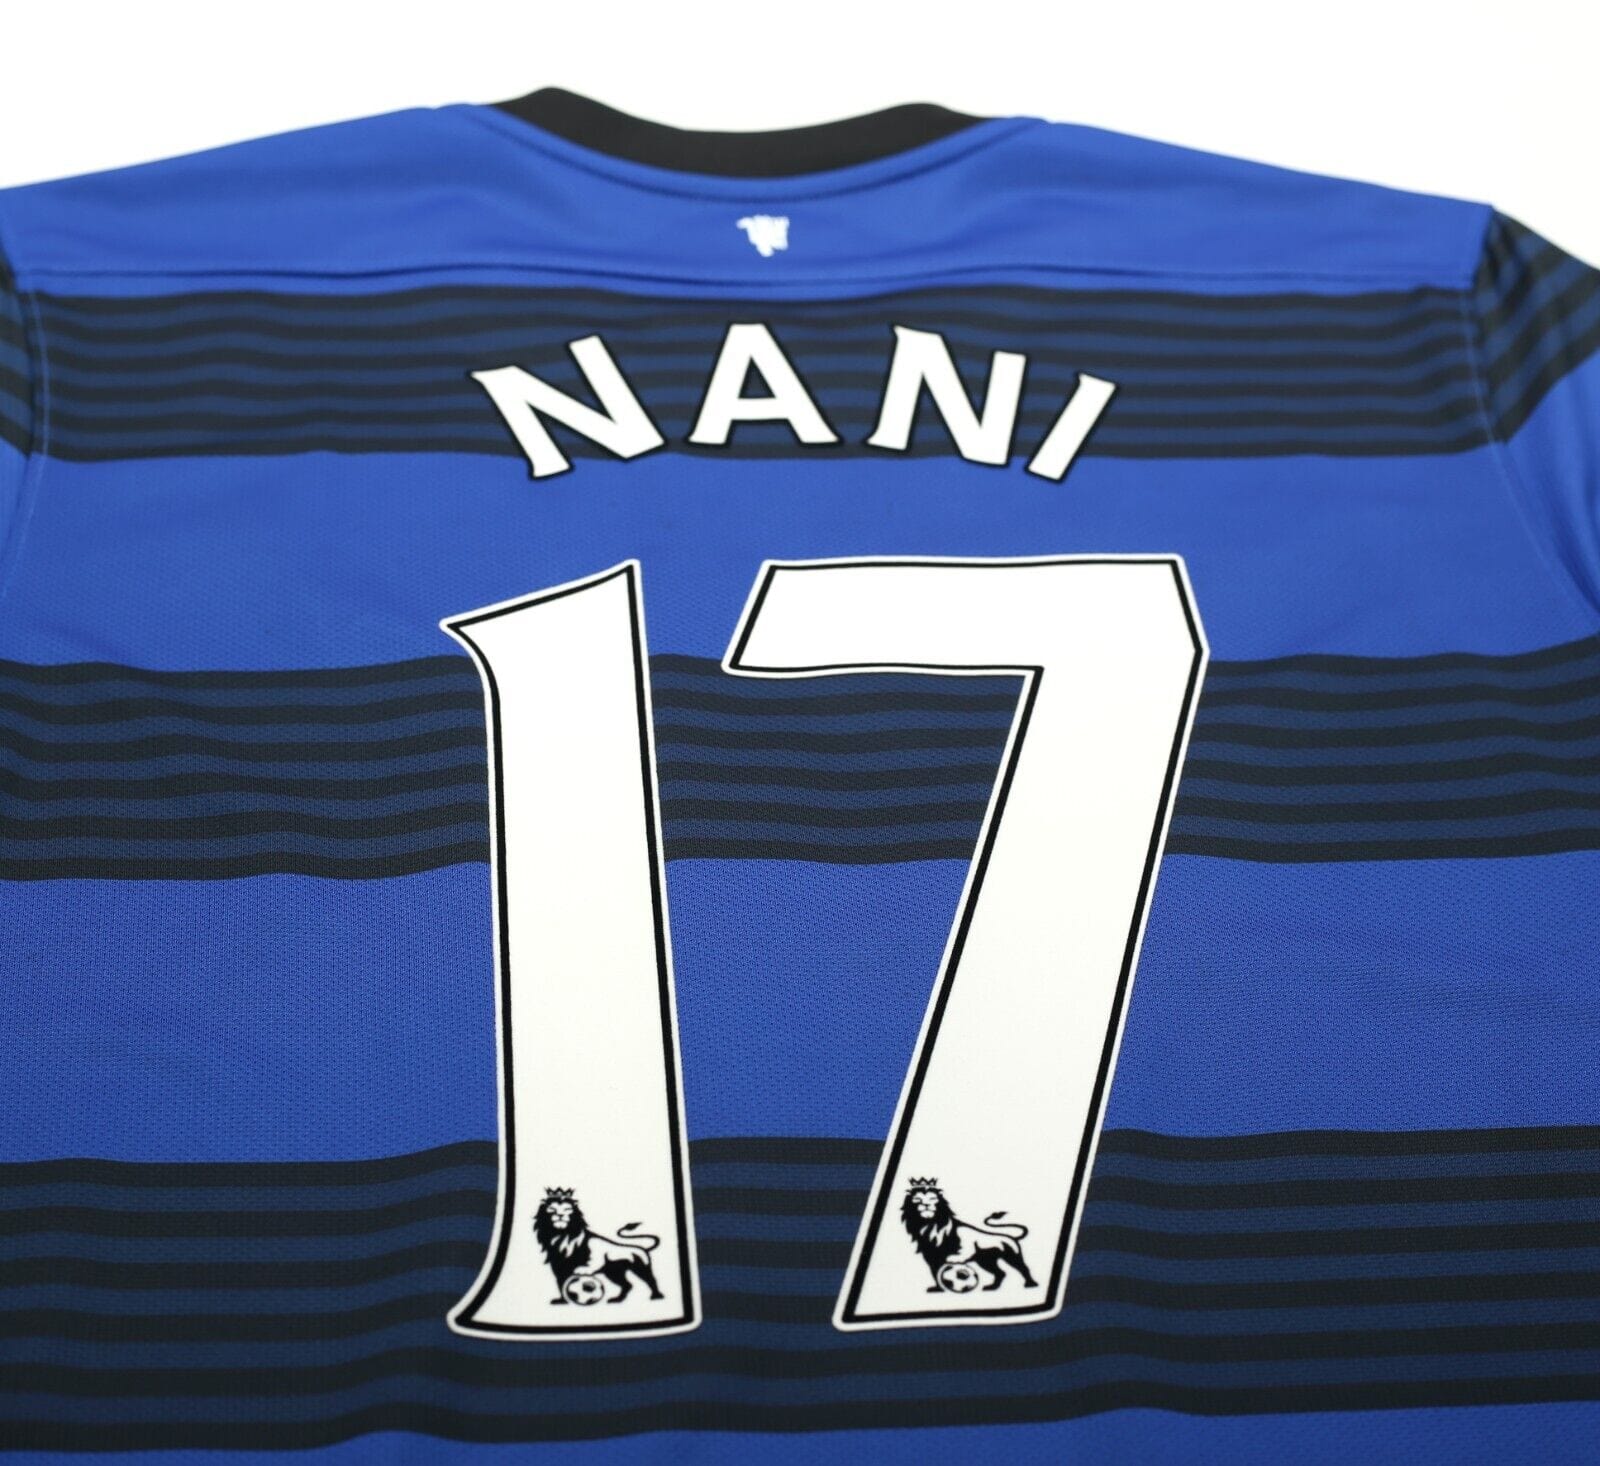 2011/13 NANI #17 Manchester United Vintage Nike Away Football Shirt (M)